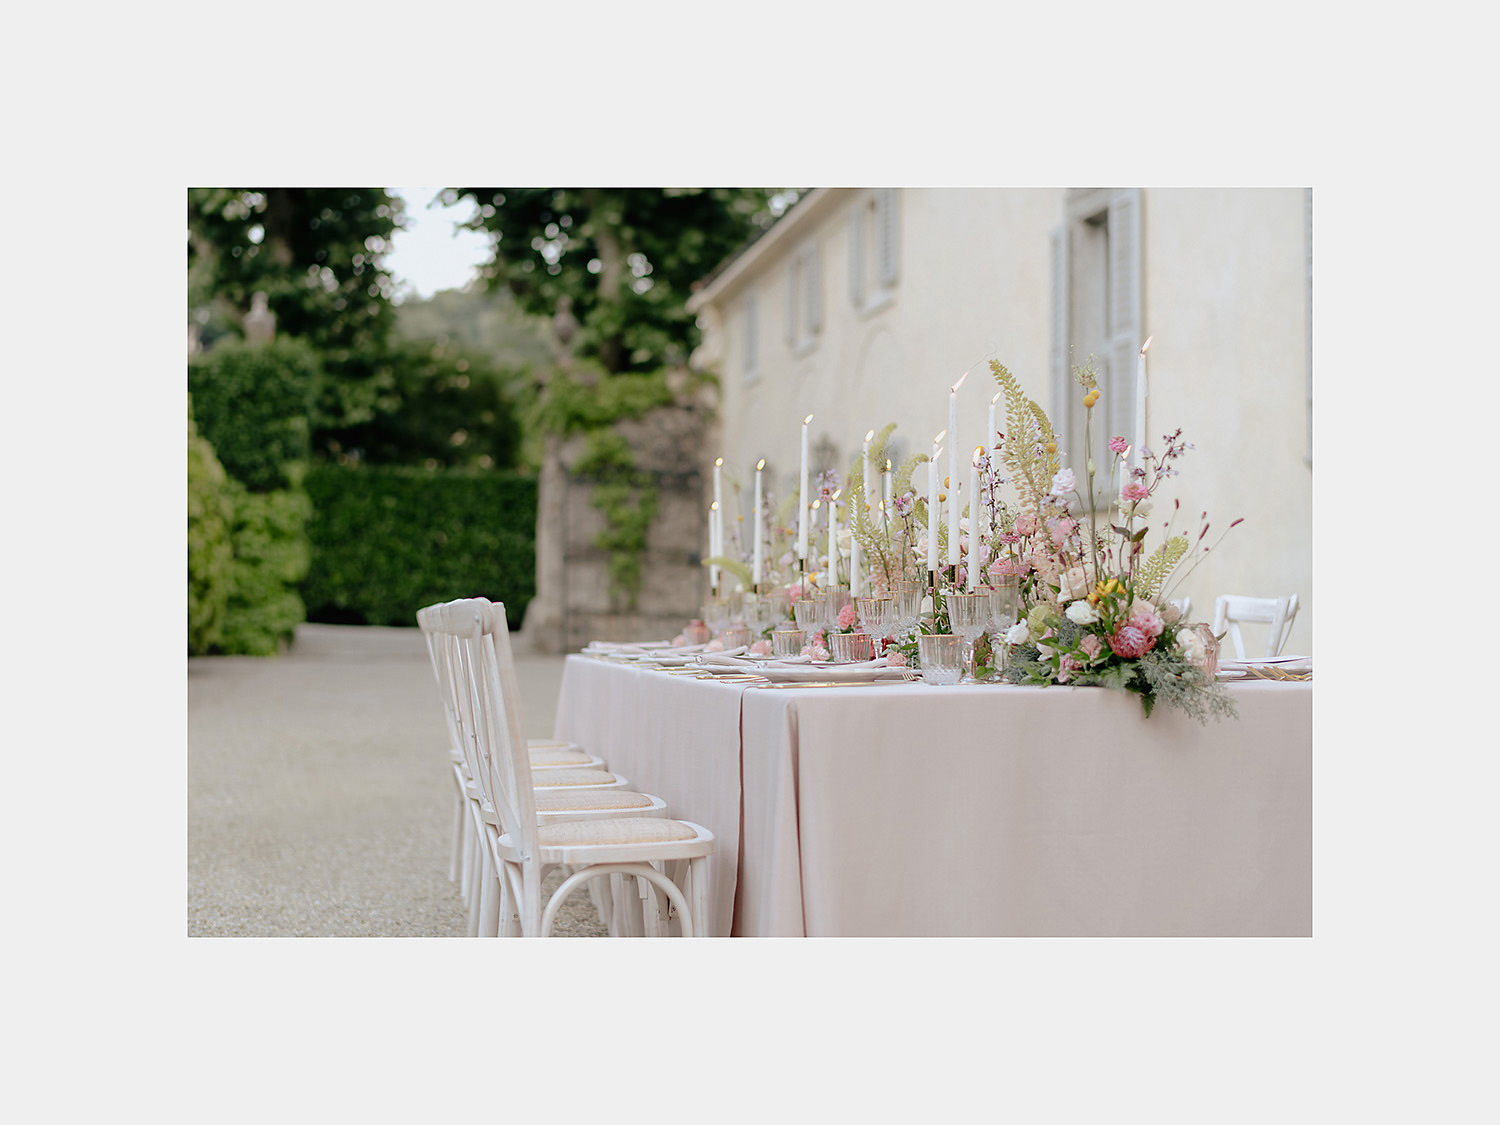 villa balbiano wedding photographer lake como table setup decor details